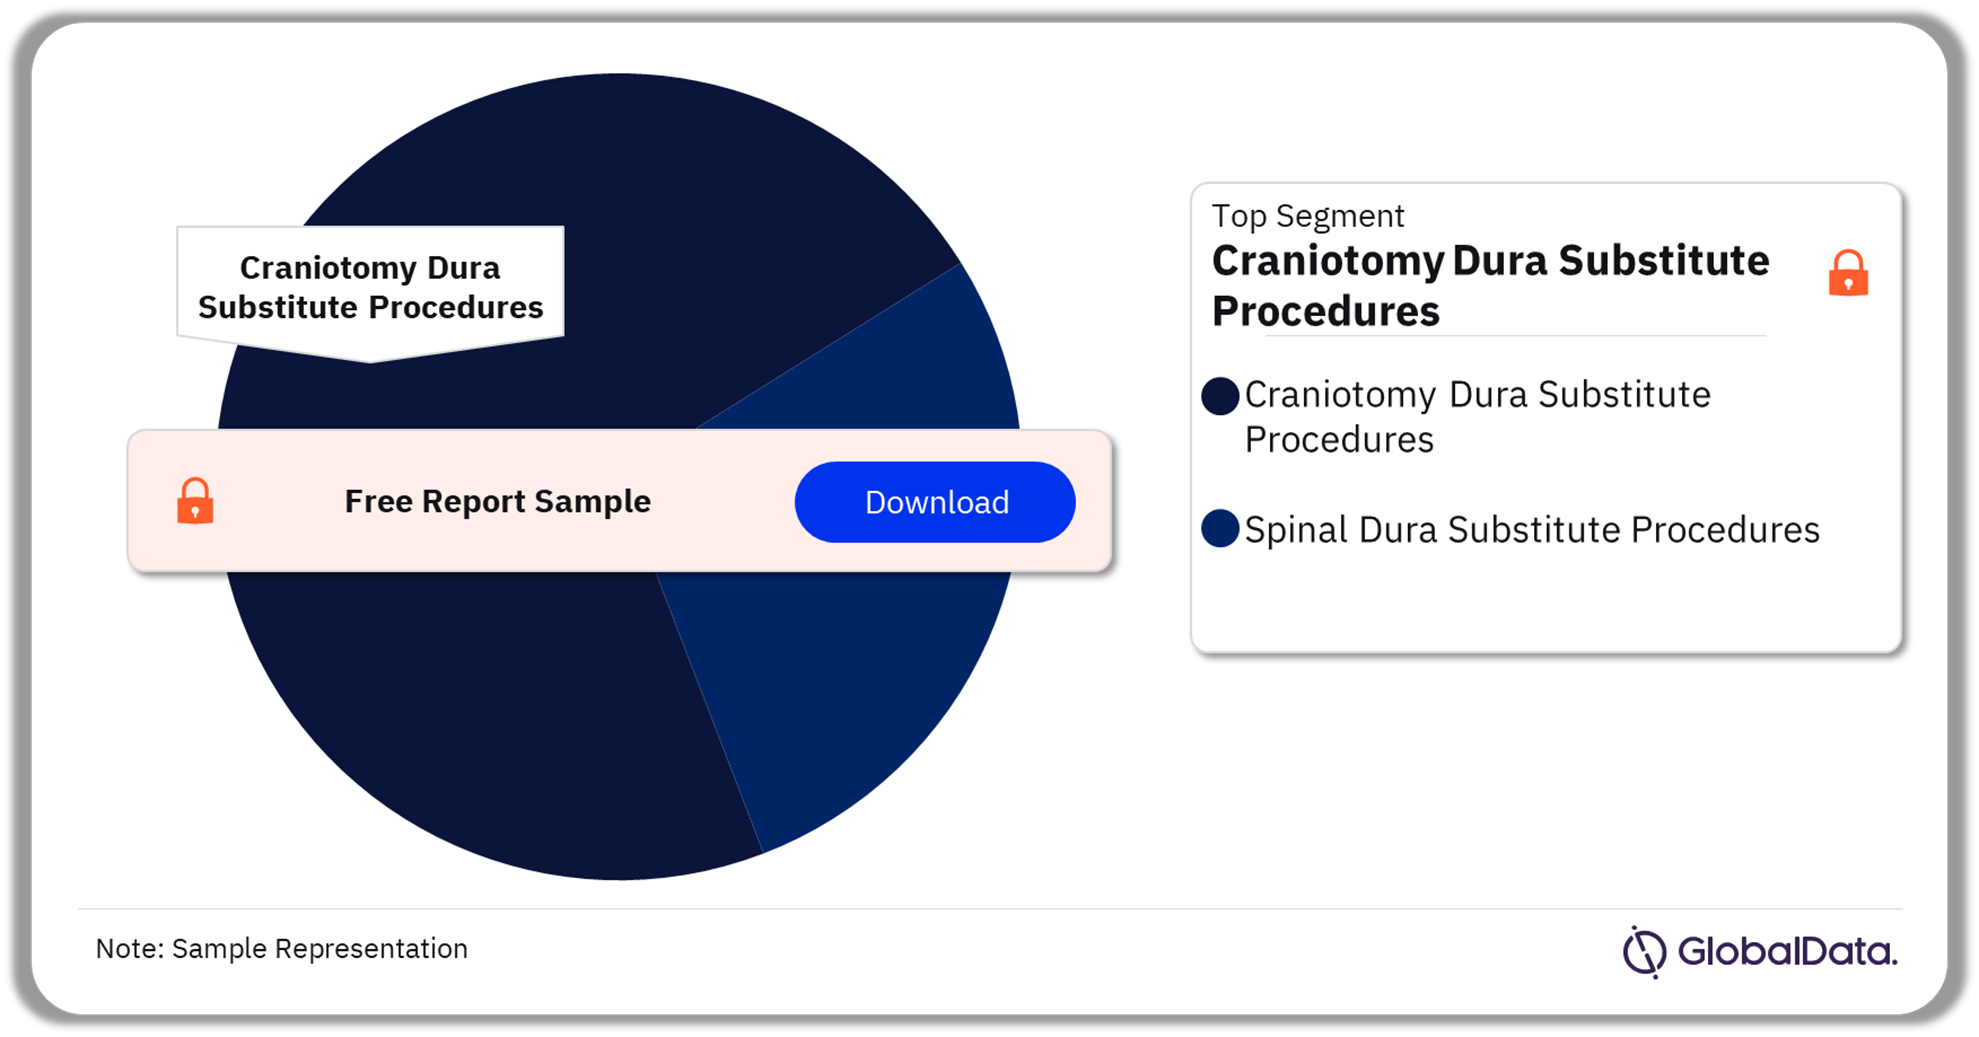 France Craniotomy Dura Substitute Procedures Market Analysis by Segments, 2022 (%)